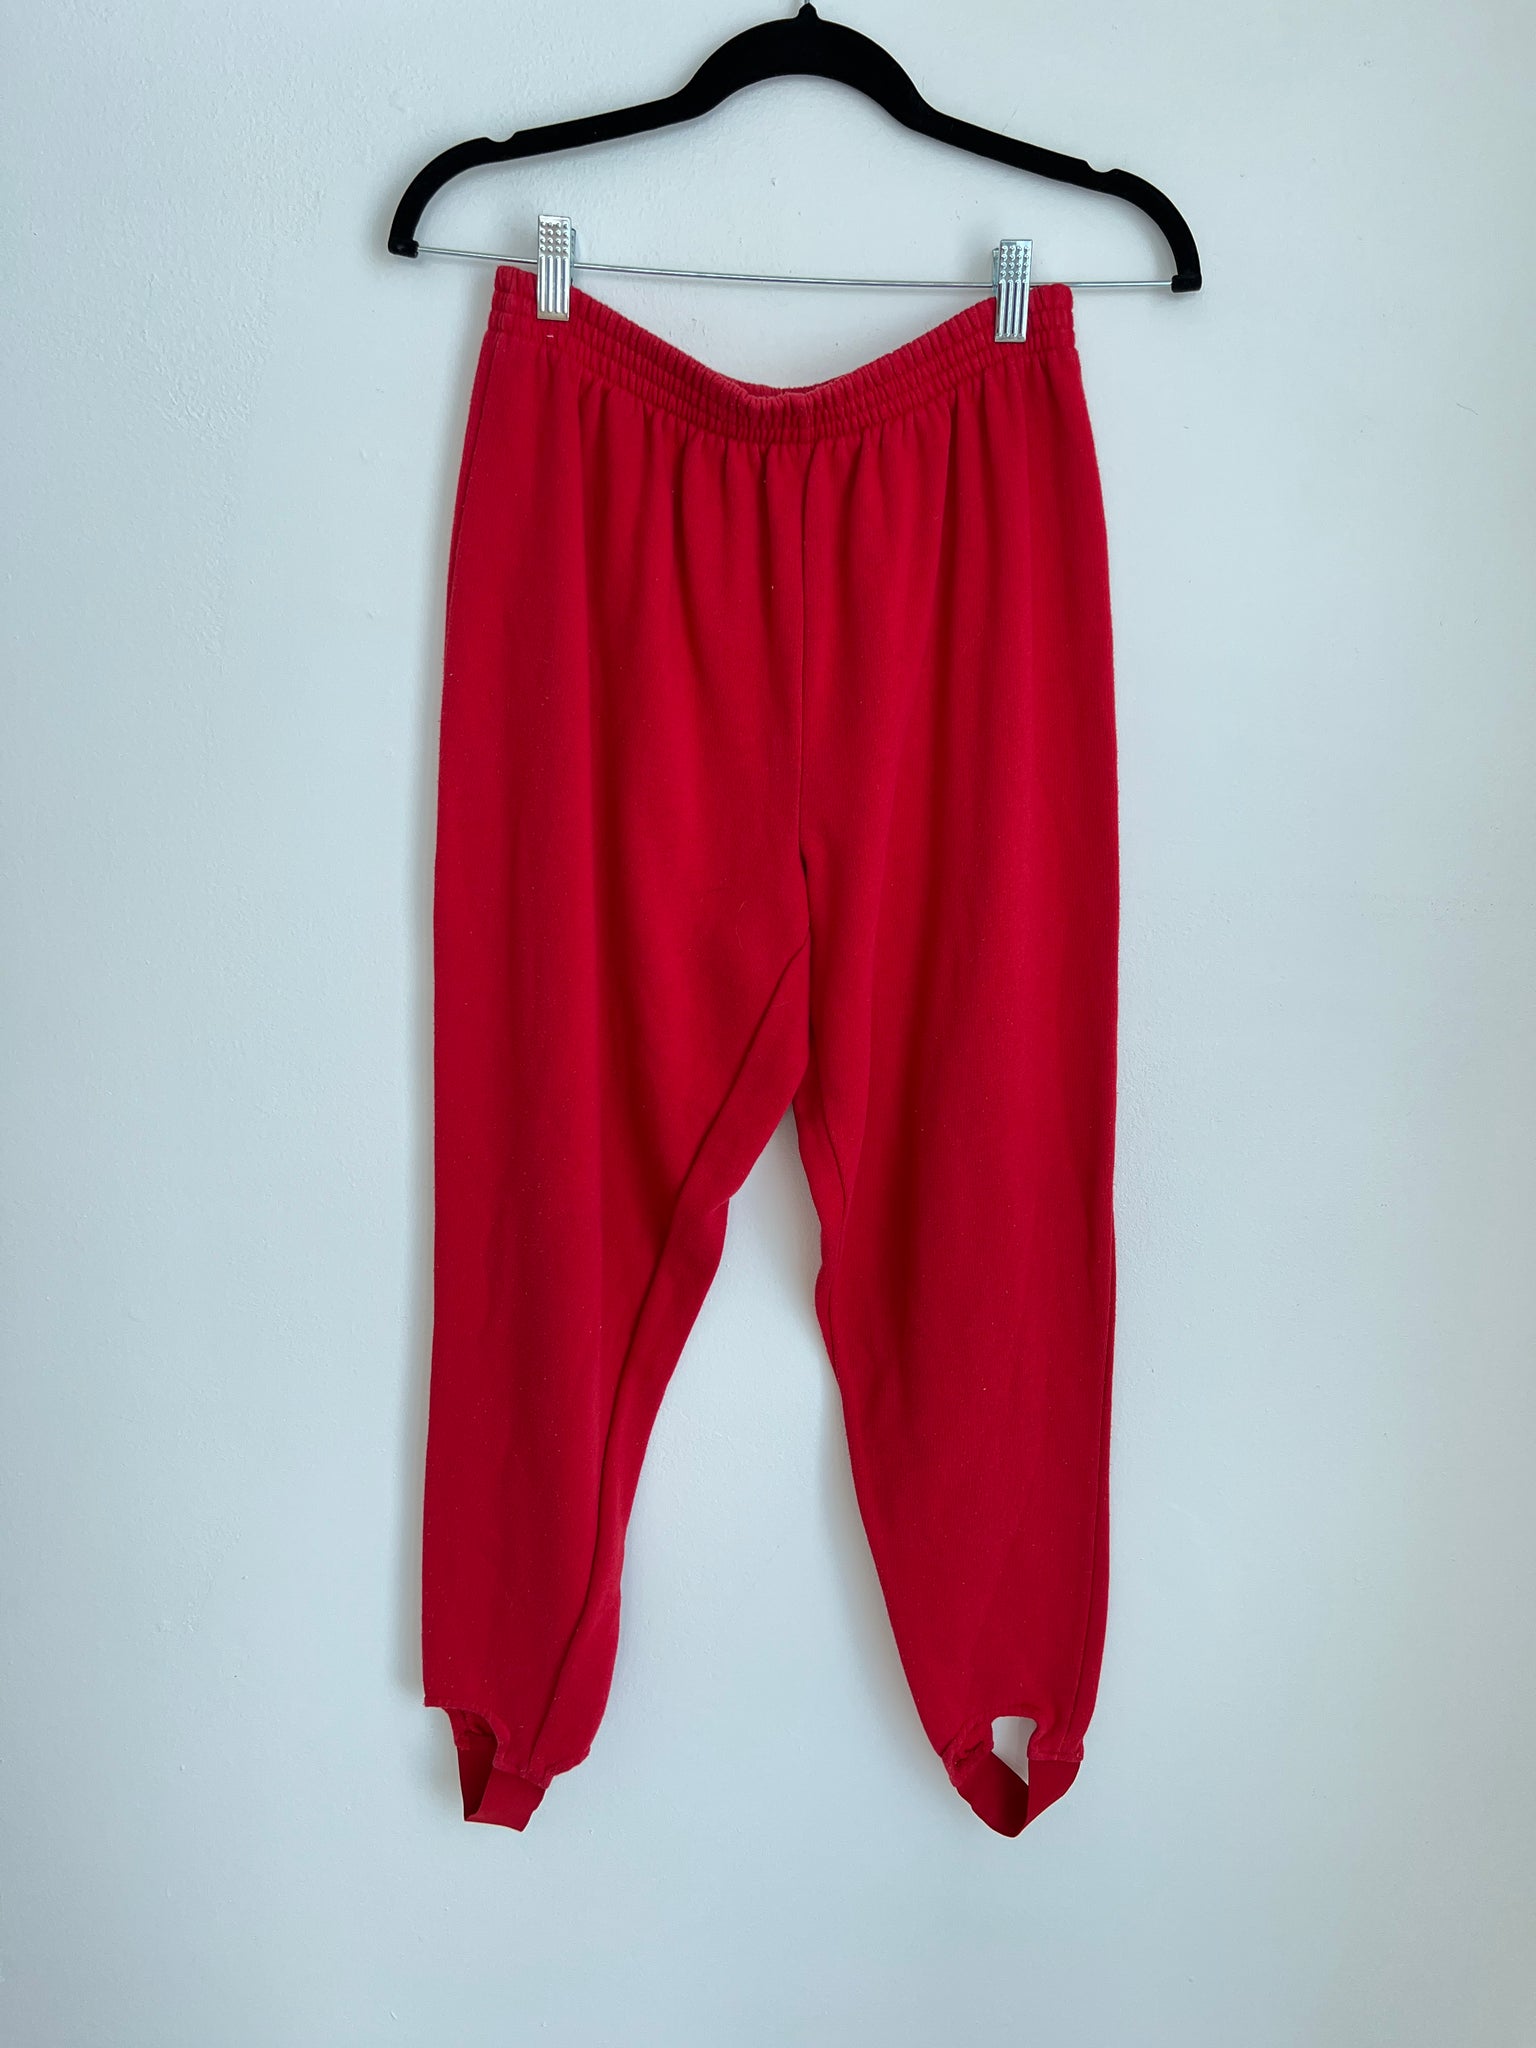 1980s PANTS- red stirup sweatpants